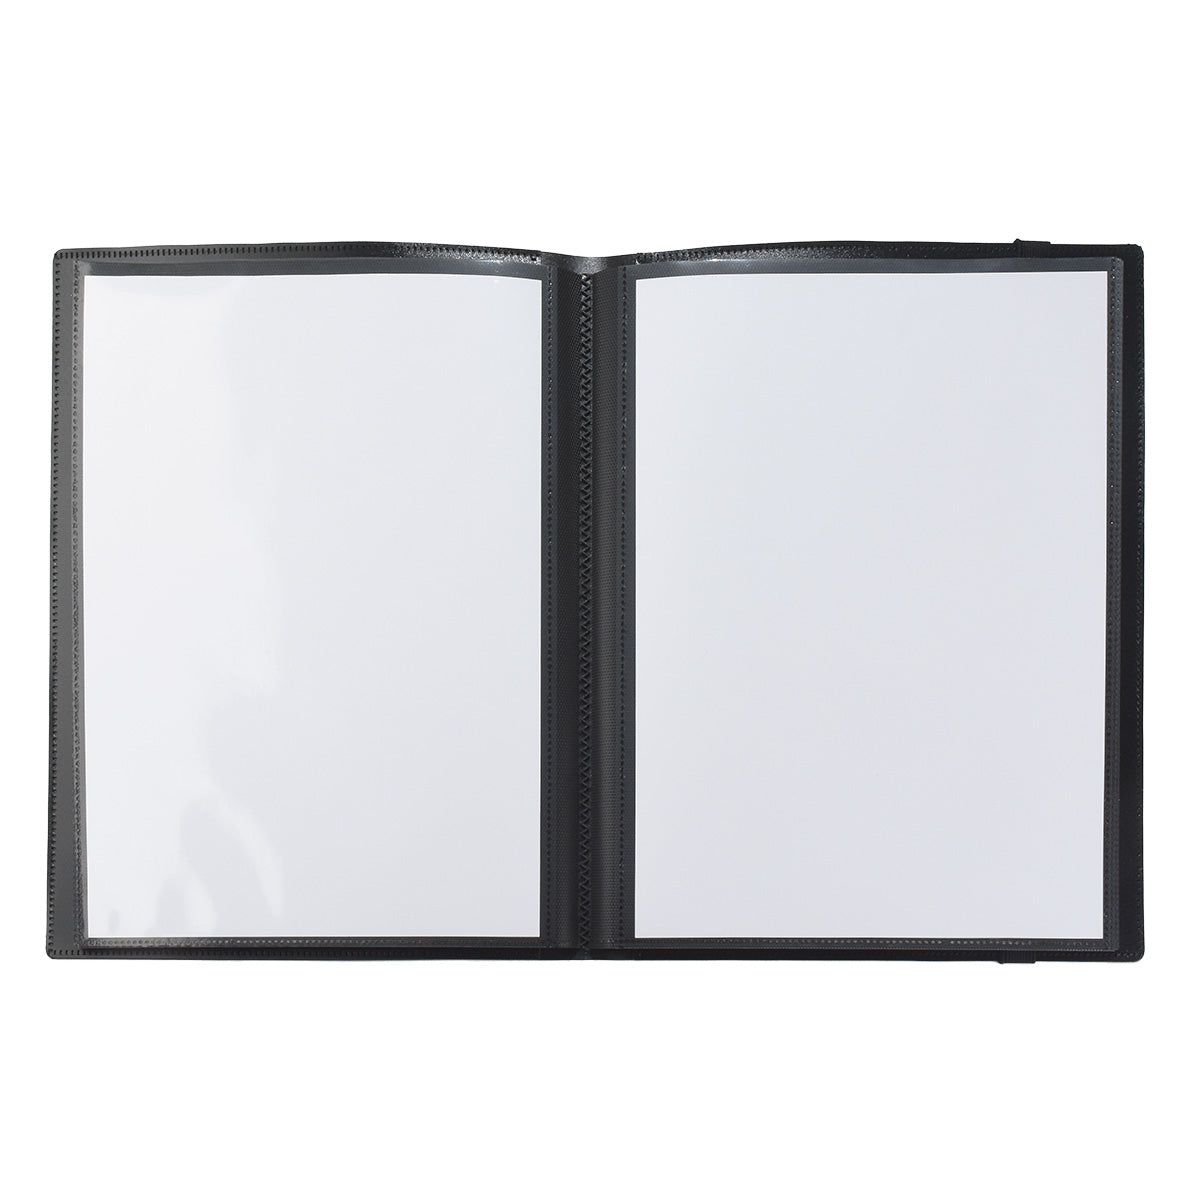 Photo Books - 8 1/2 x 11 or 11 x 8 1/2 Sheet Size – Pro-Bind